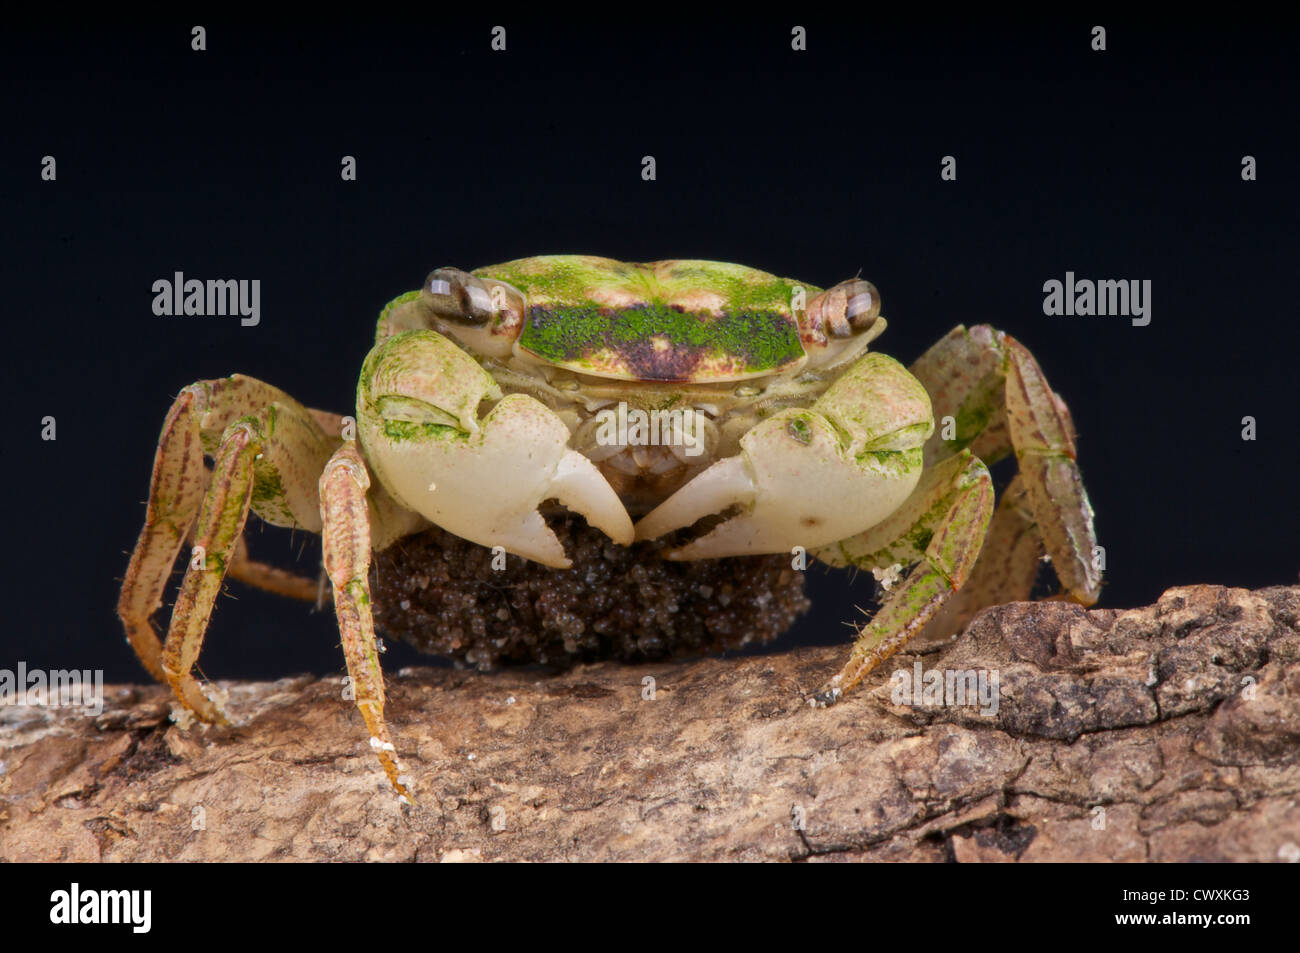 Green vampire crab / Geosesarma sp carrying eggs Stock Photo